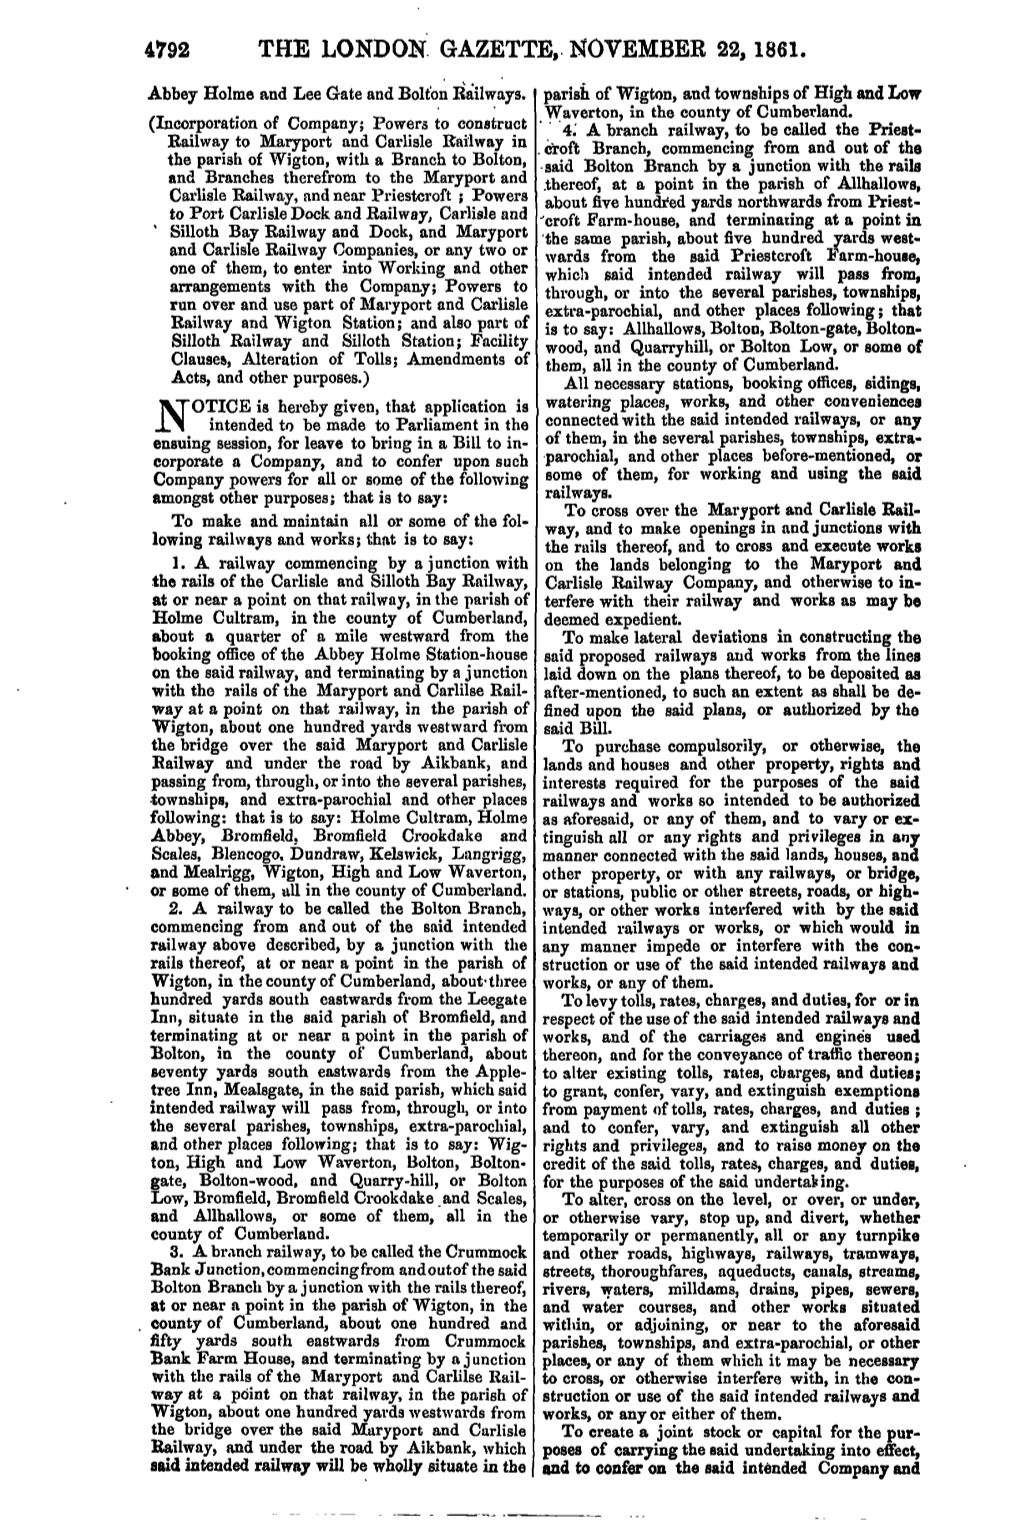 The London Gazette, November 22,1861